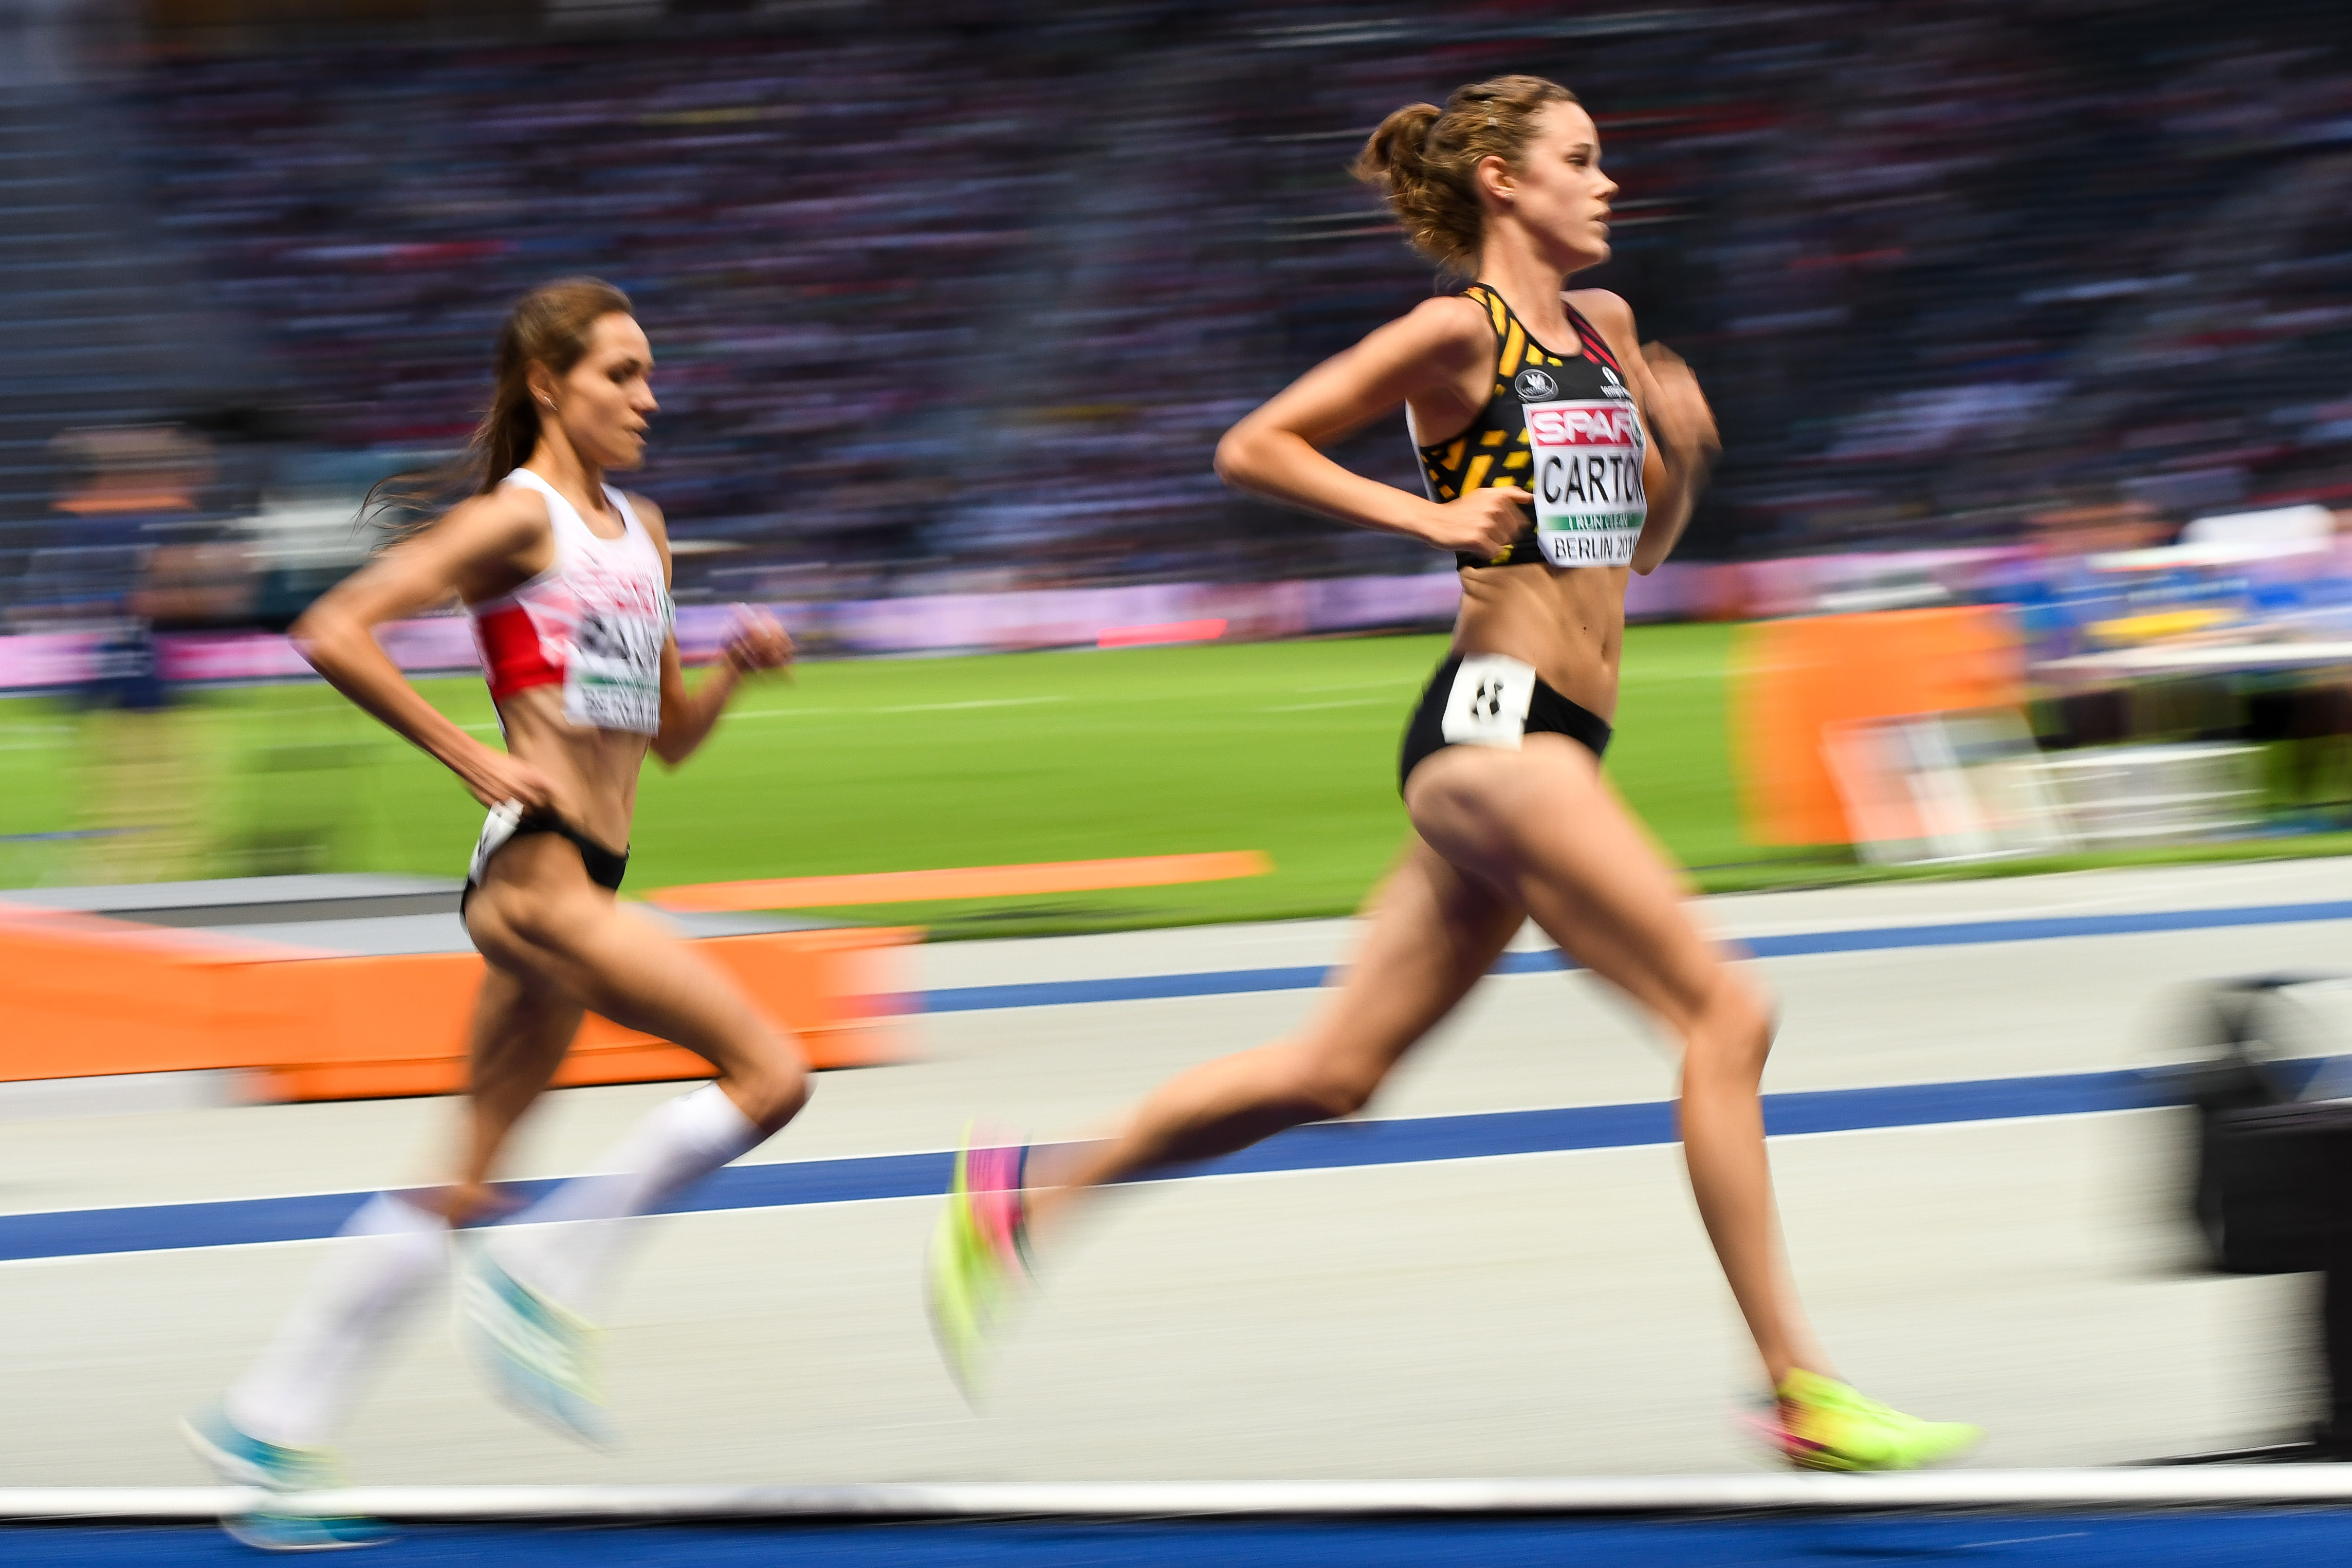 Louise Carton 5000m Berlijn 2018